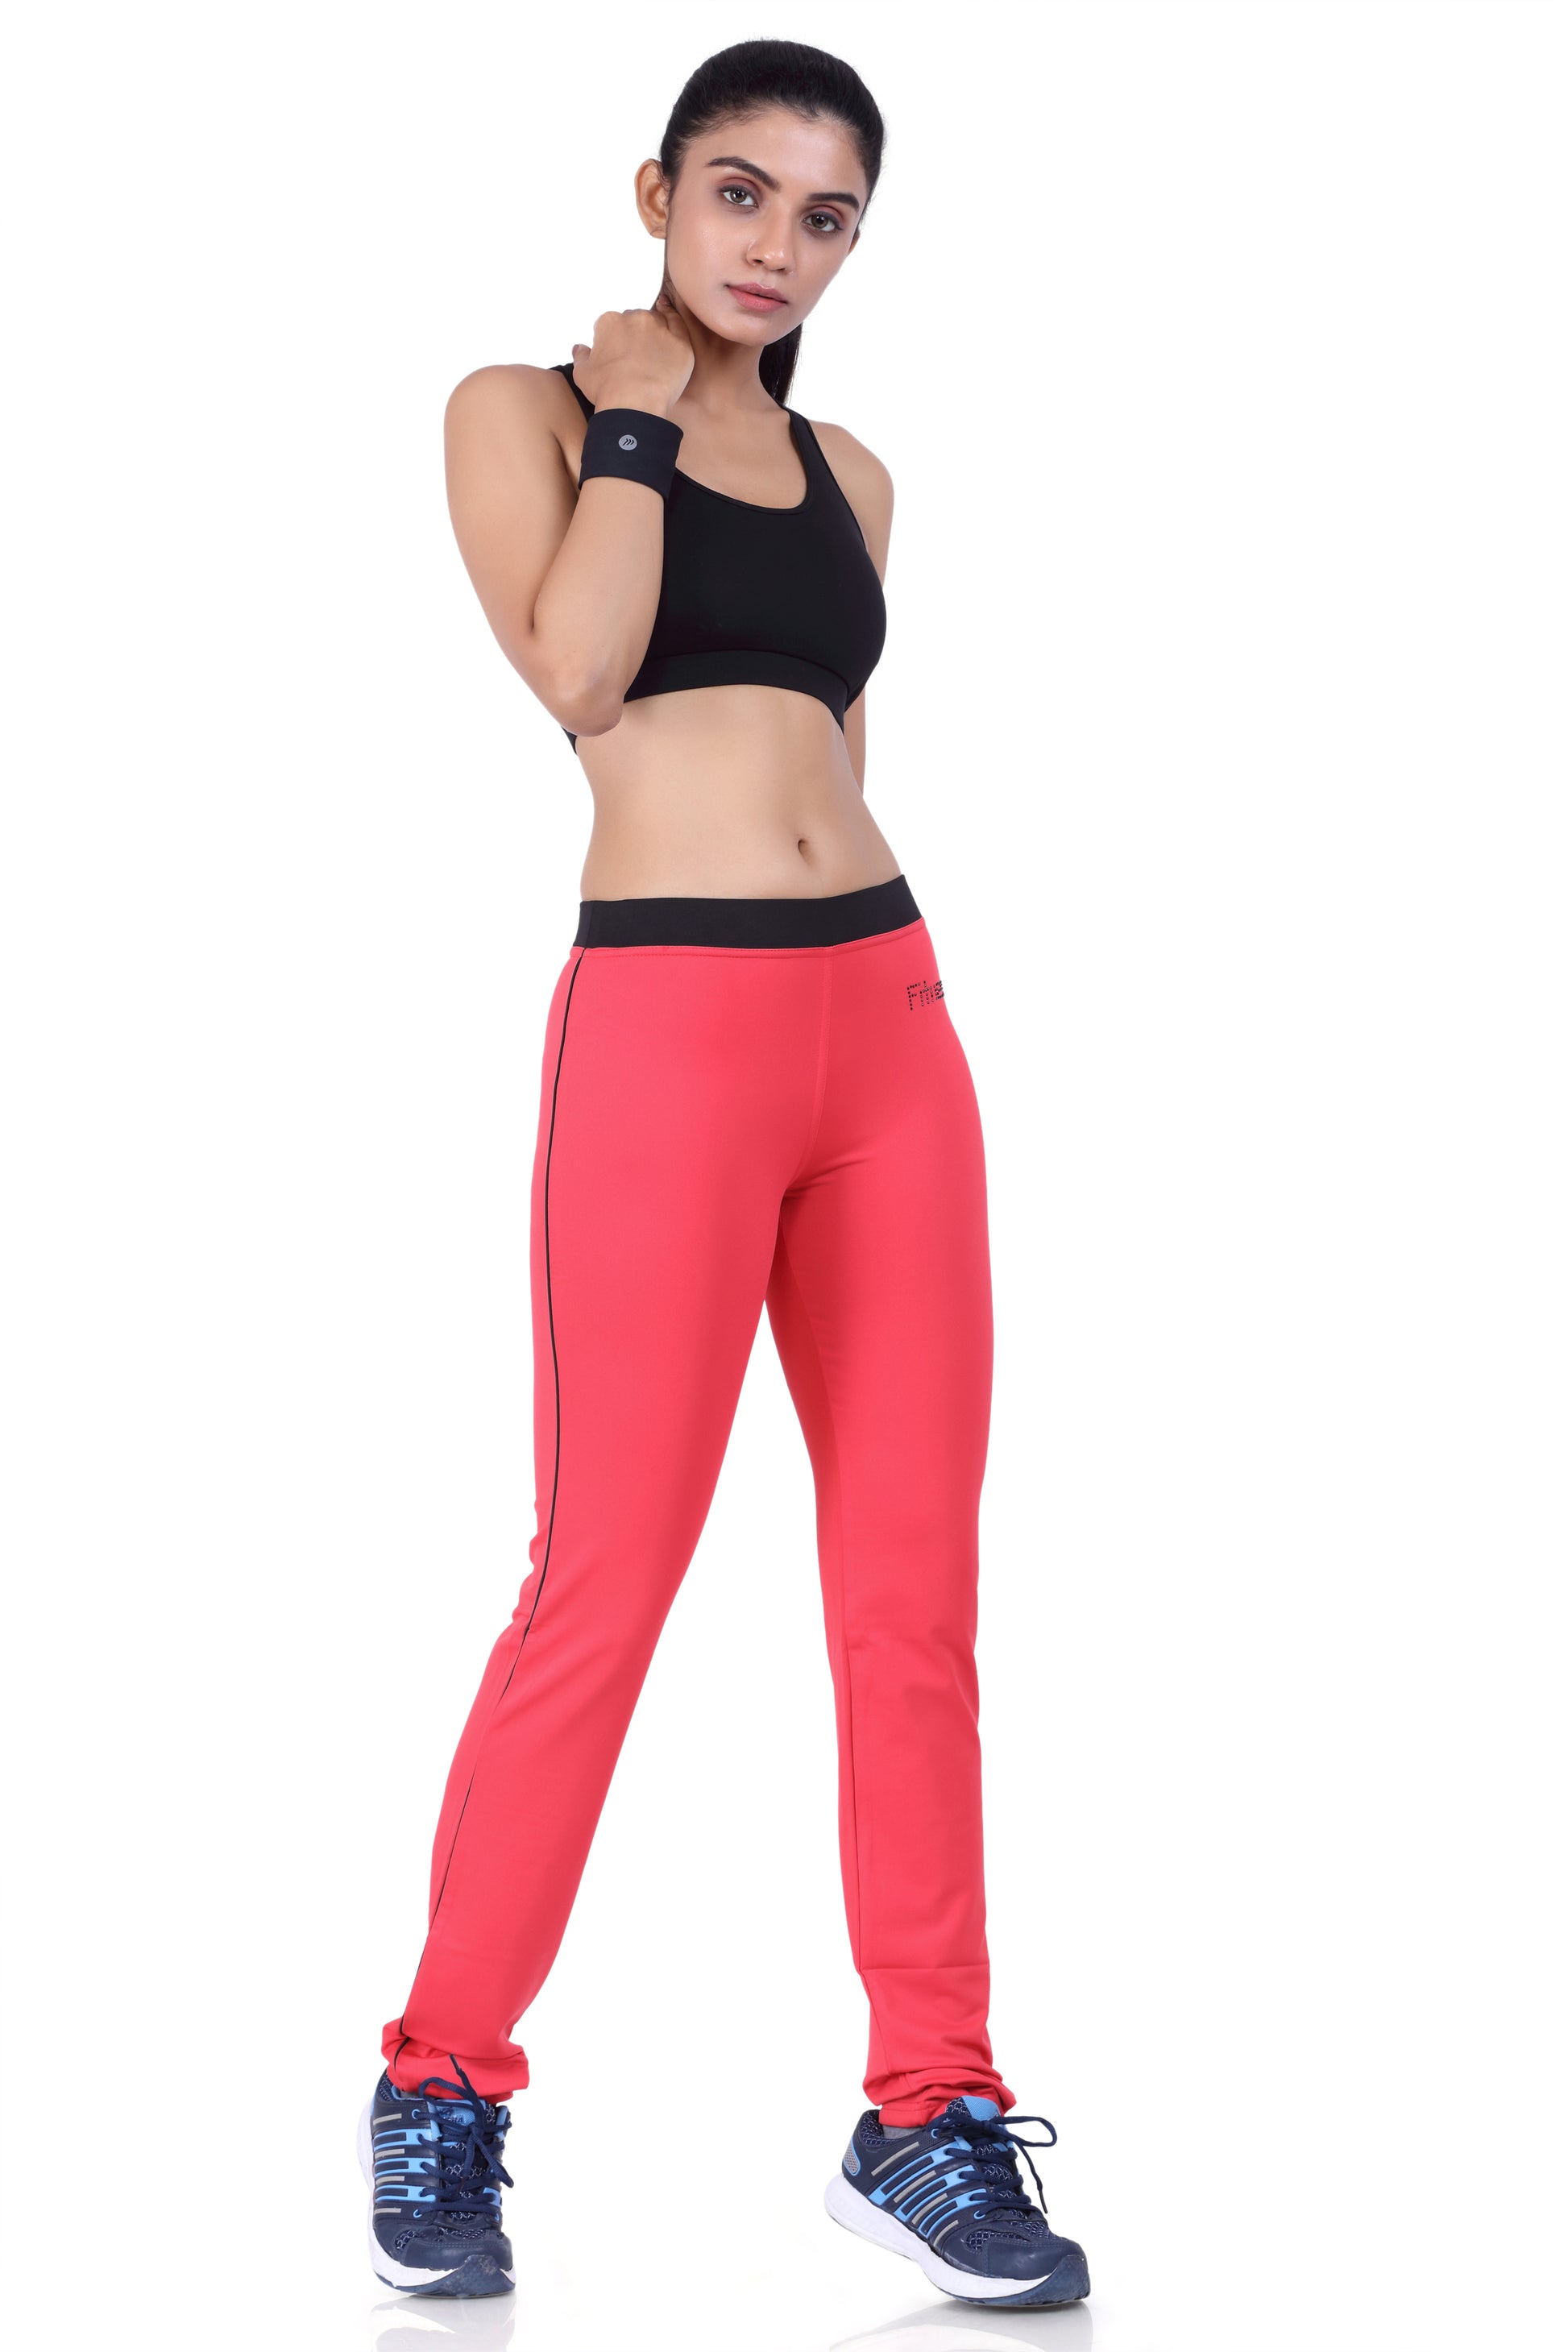 Laasa Sports Bottom Wear Dri-FIT Women's Mid-Rise Regular Fit Gym & Fitness  Narrow Pant at Rs 995/piece in Mumbai